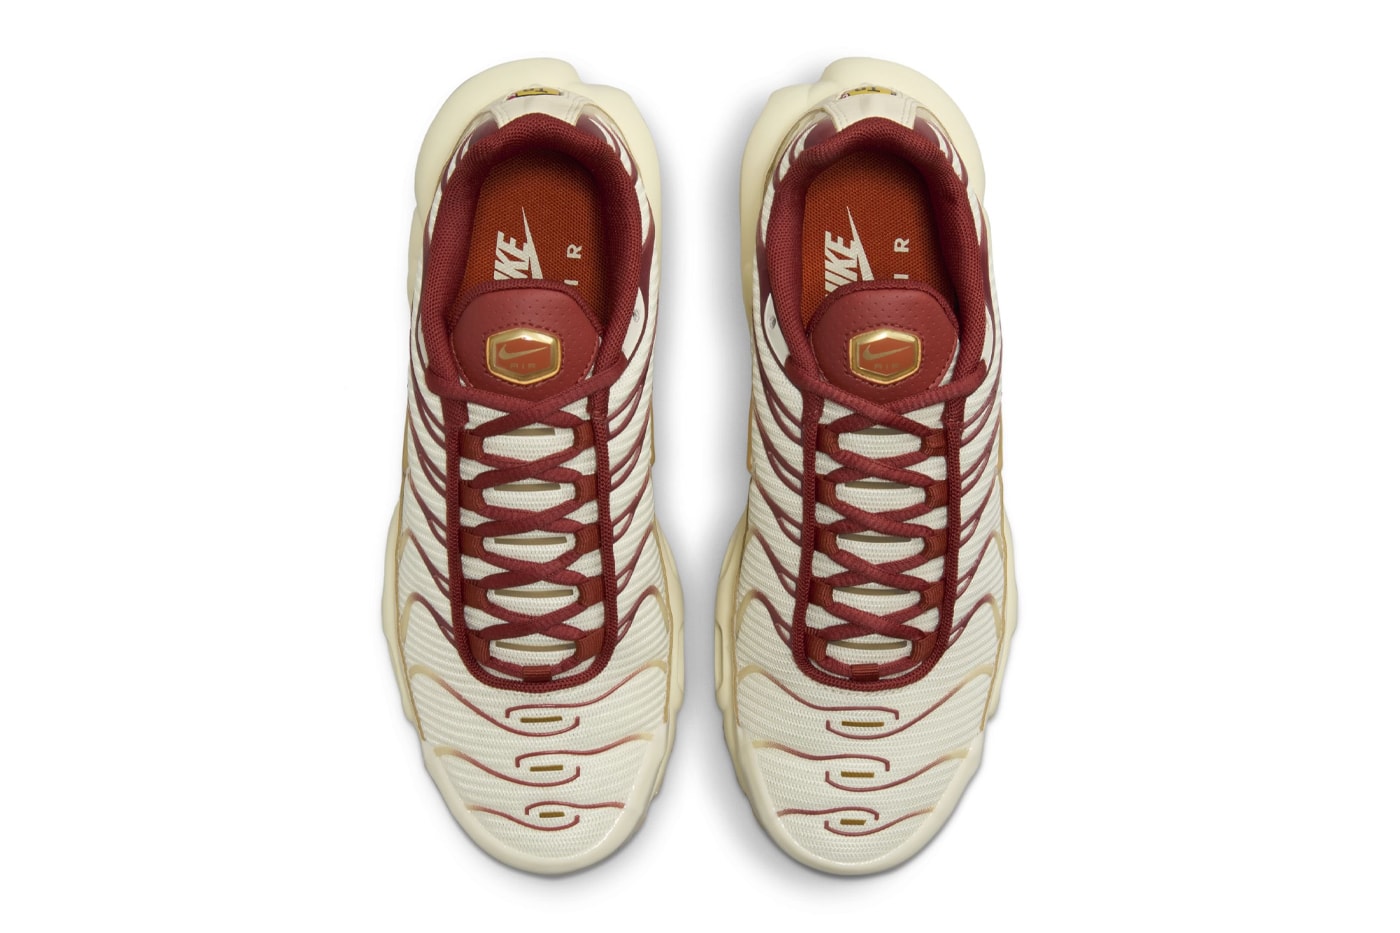 Nike Air Max Plus sean mcdowell sail team red vanilla burgundy release info date price